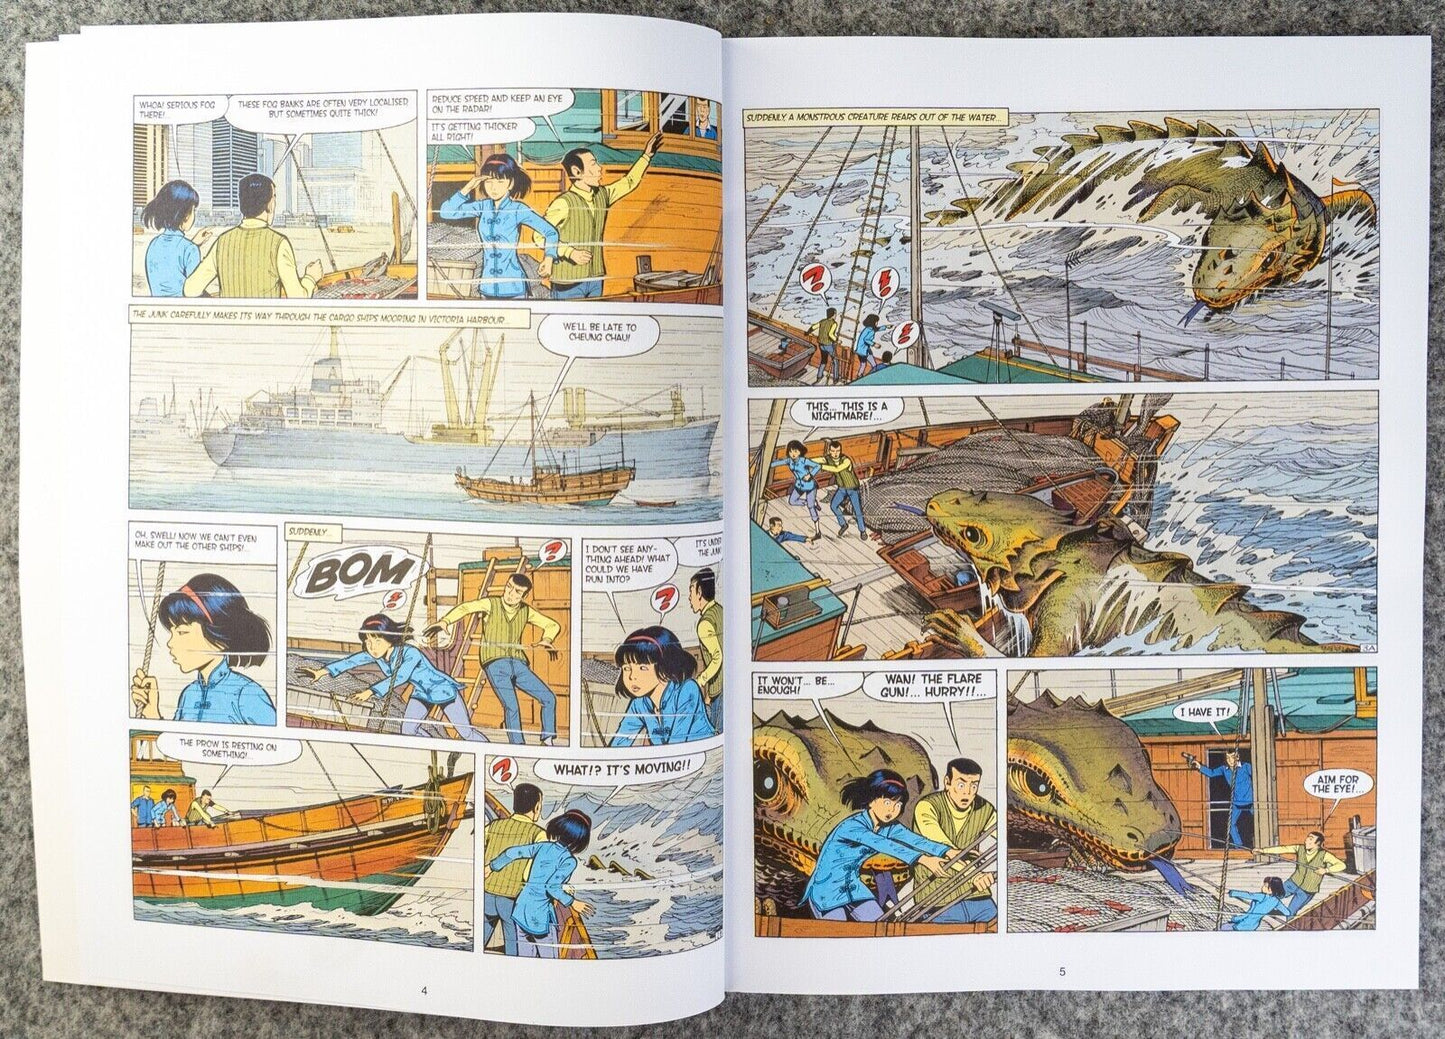 Yoko Tsuno Volume 5 - The Dragon Of Hong Kong Cinebook Paperback Comic Book by R. Leloup